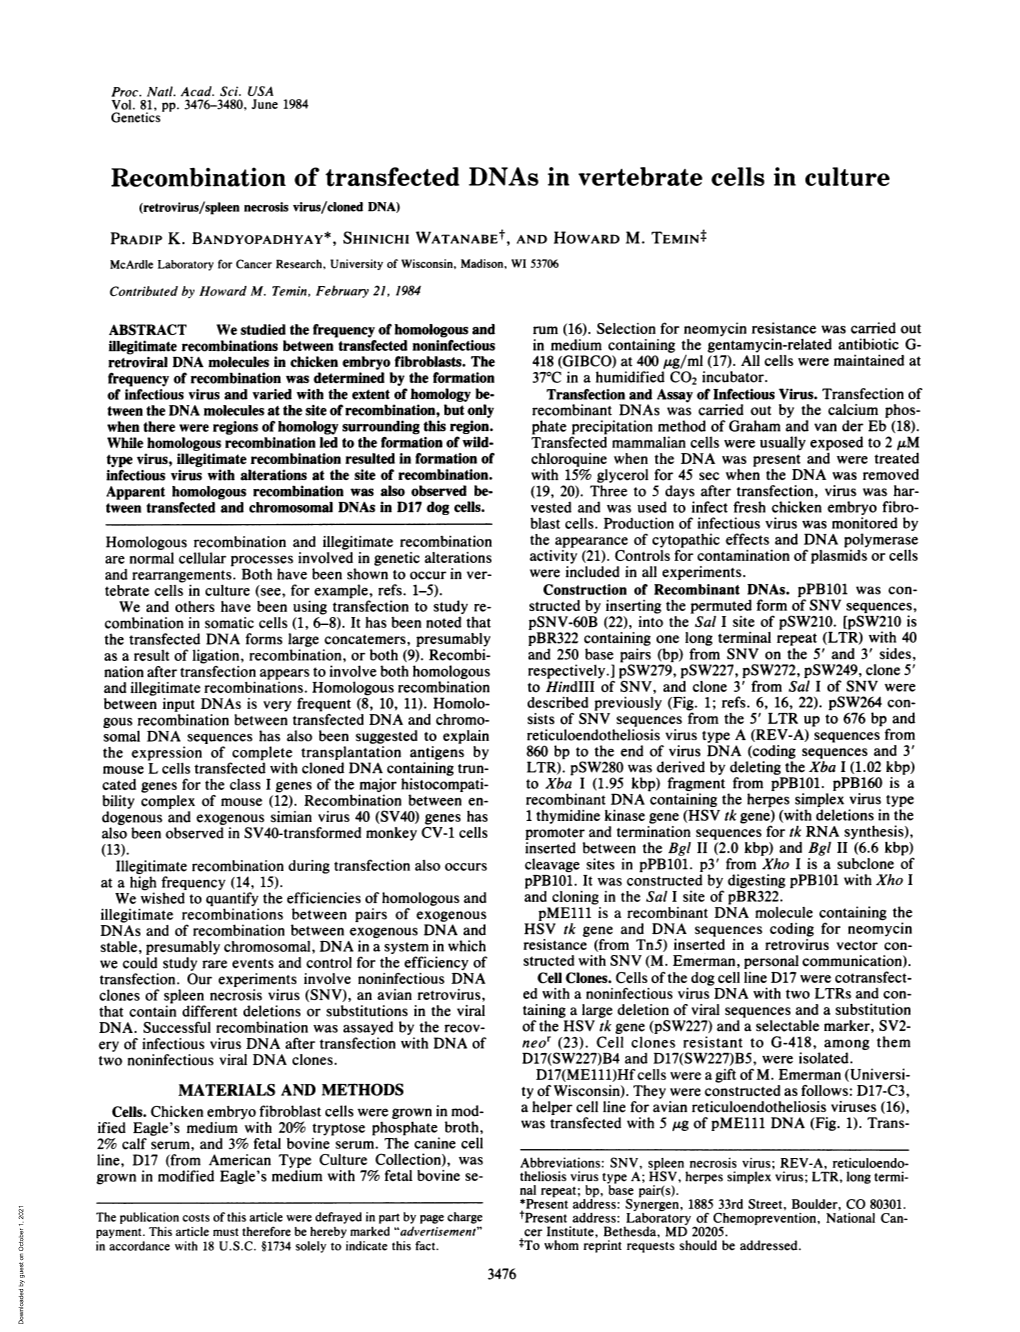 Recombination of Transfected Dnas in Vertebrate Cells in Culture (Retrovirus/Spleen Necrosis Virus/Cloned DNA) PRADIP K